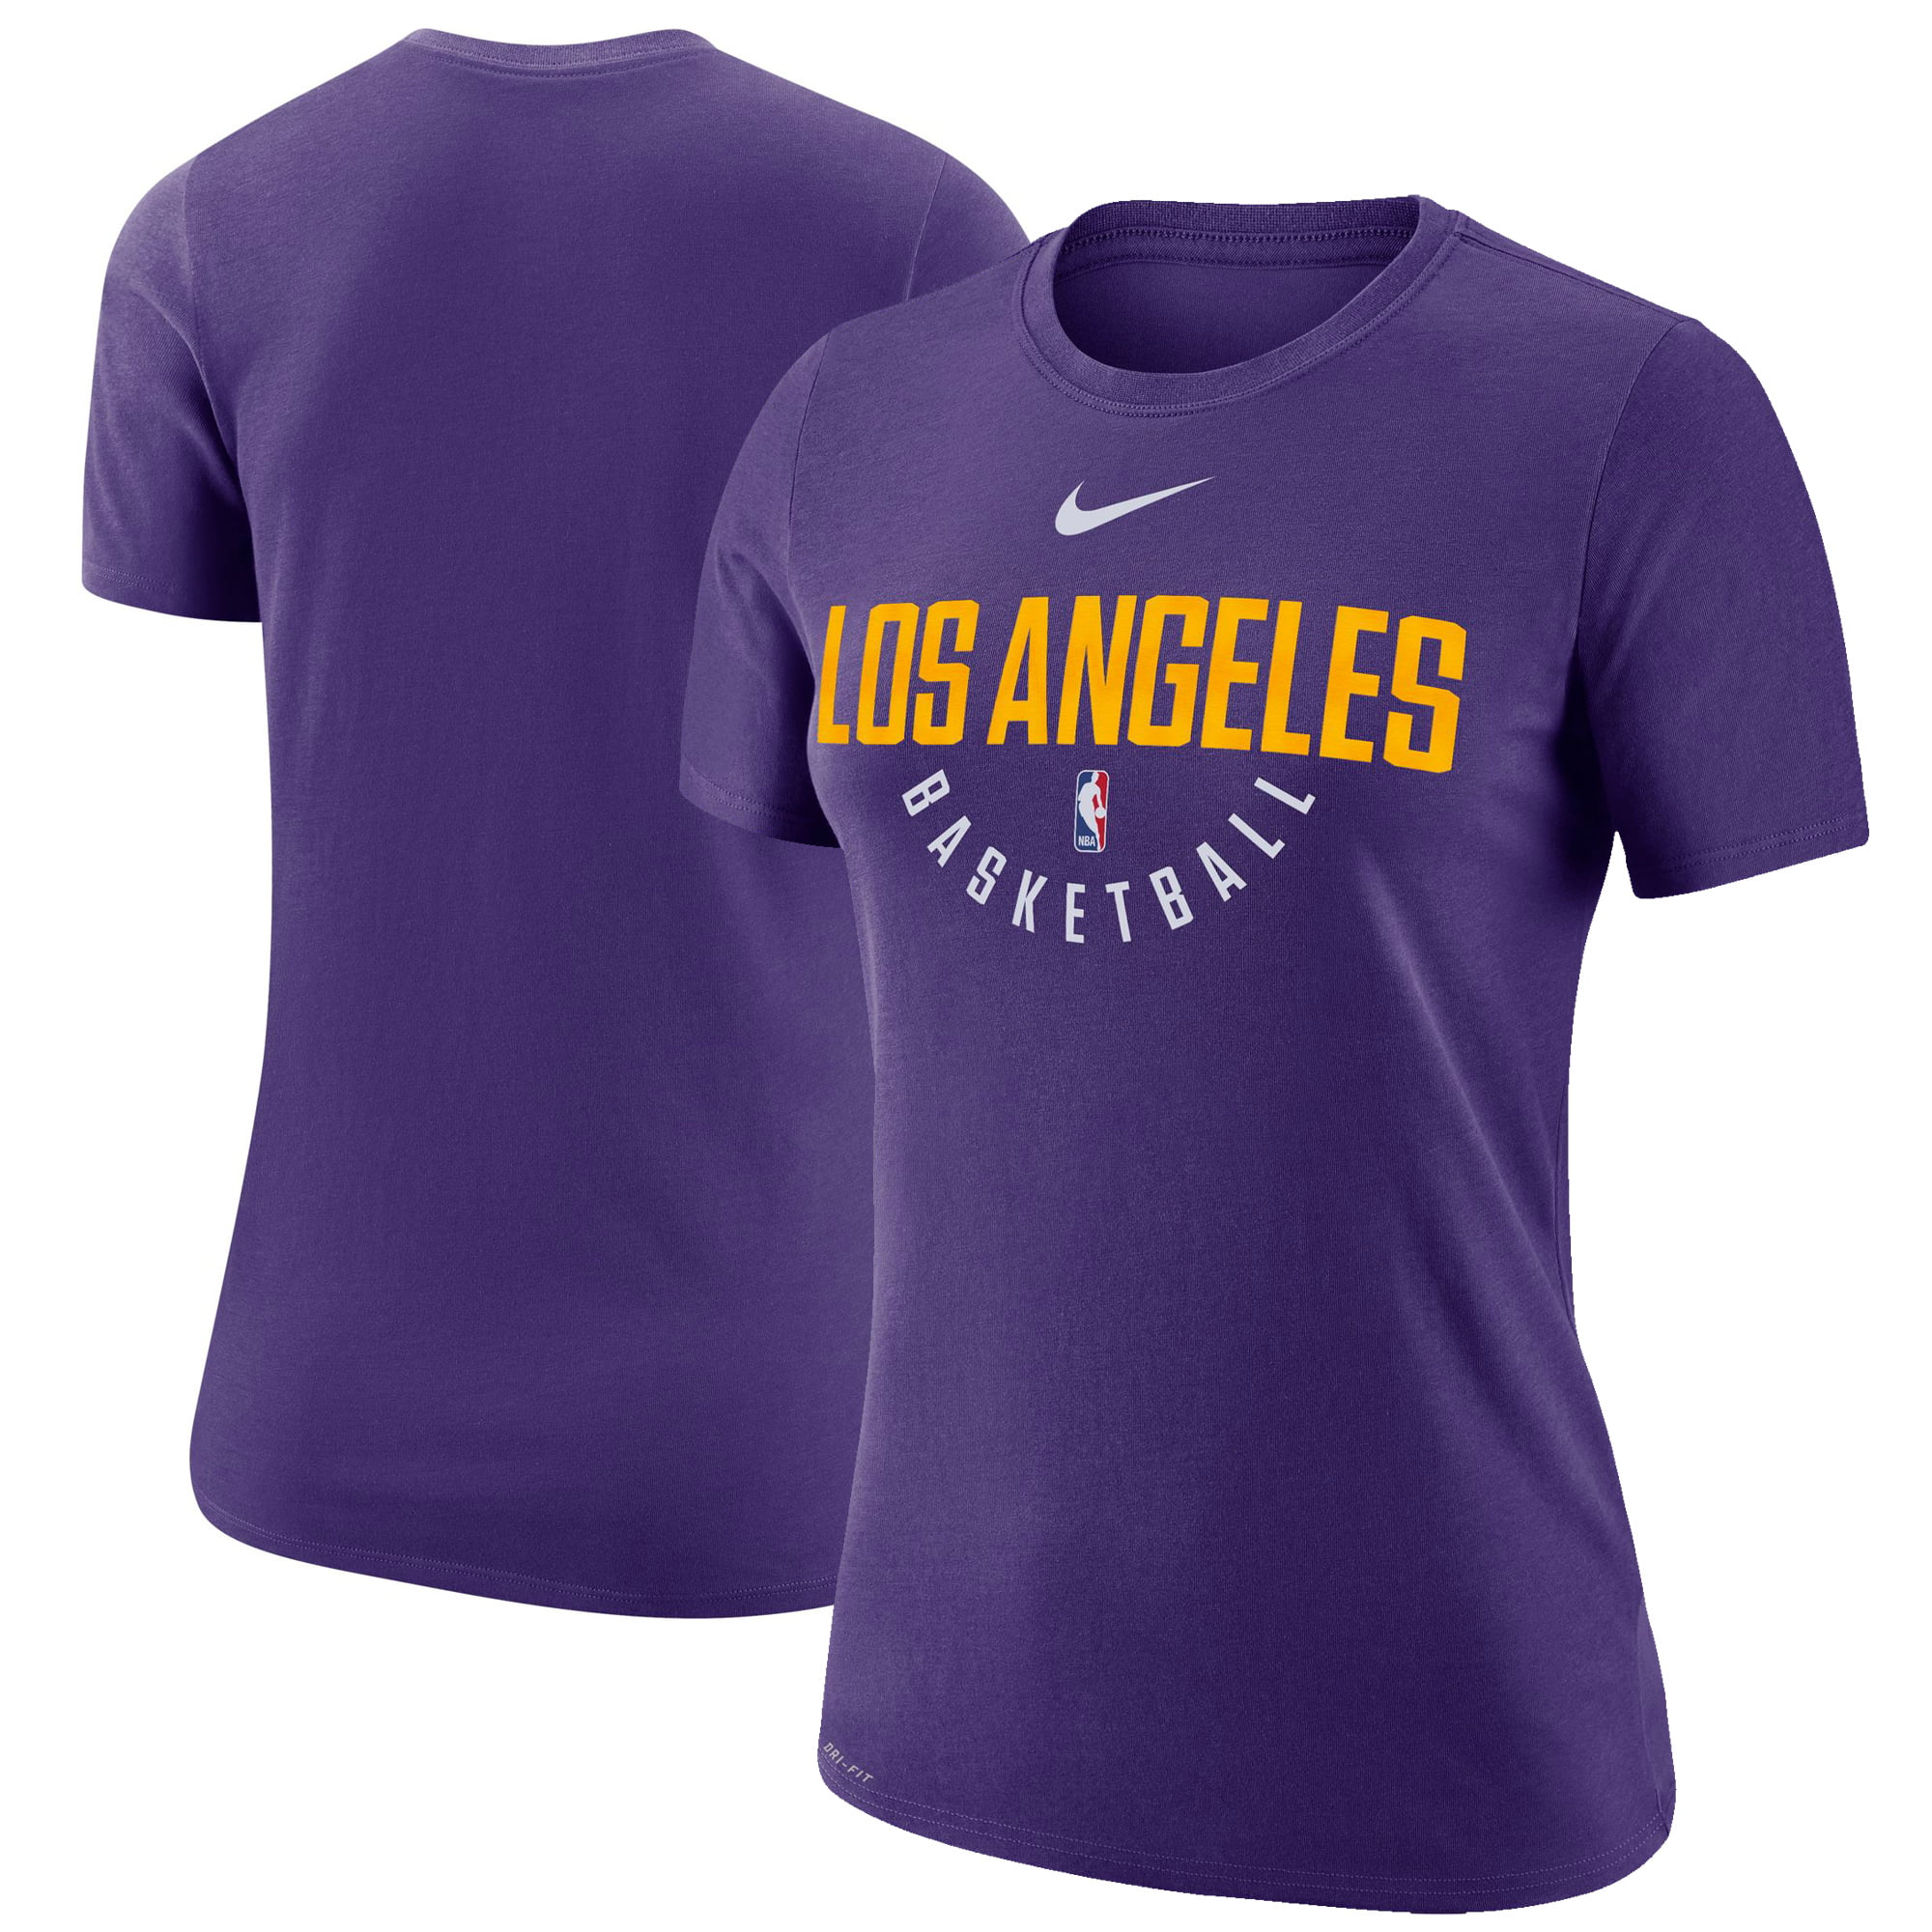 Los Angeles Lakers Nike Women's 